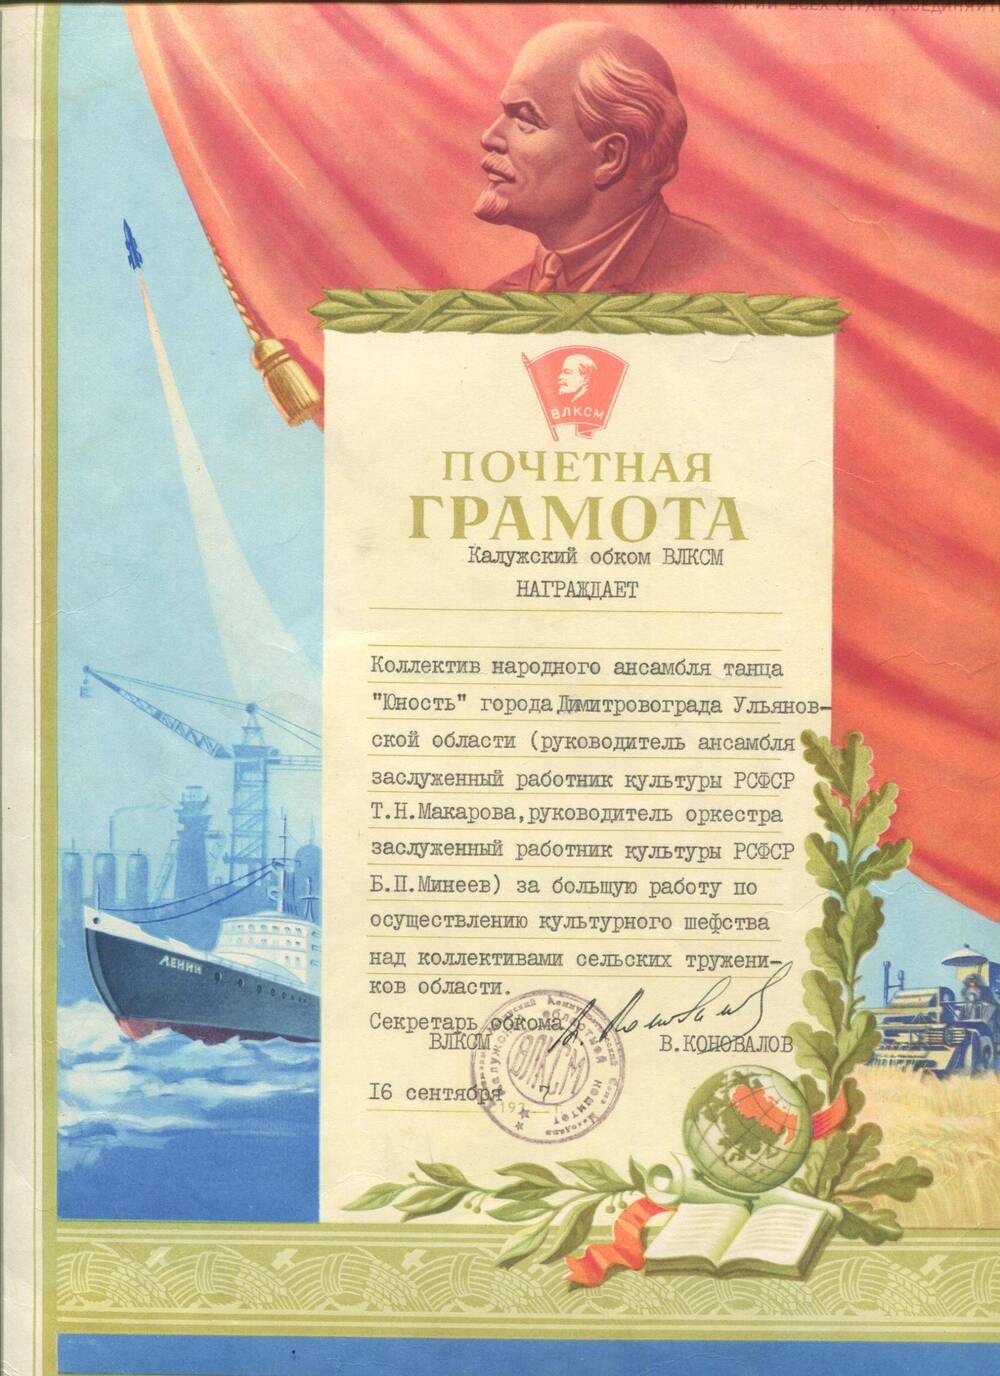 Почетная грамота ансамблю Юность. г.Димитровград, 16 сентября 1977 г.